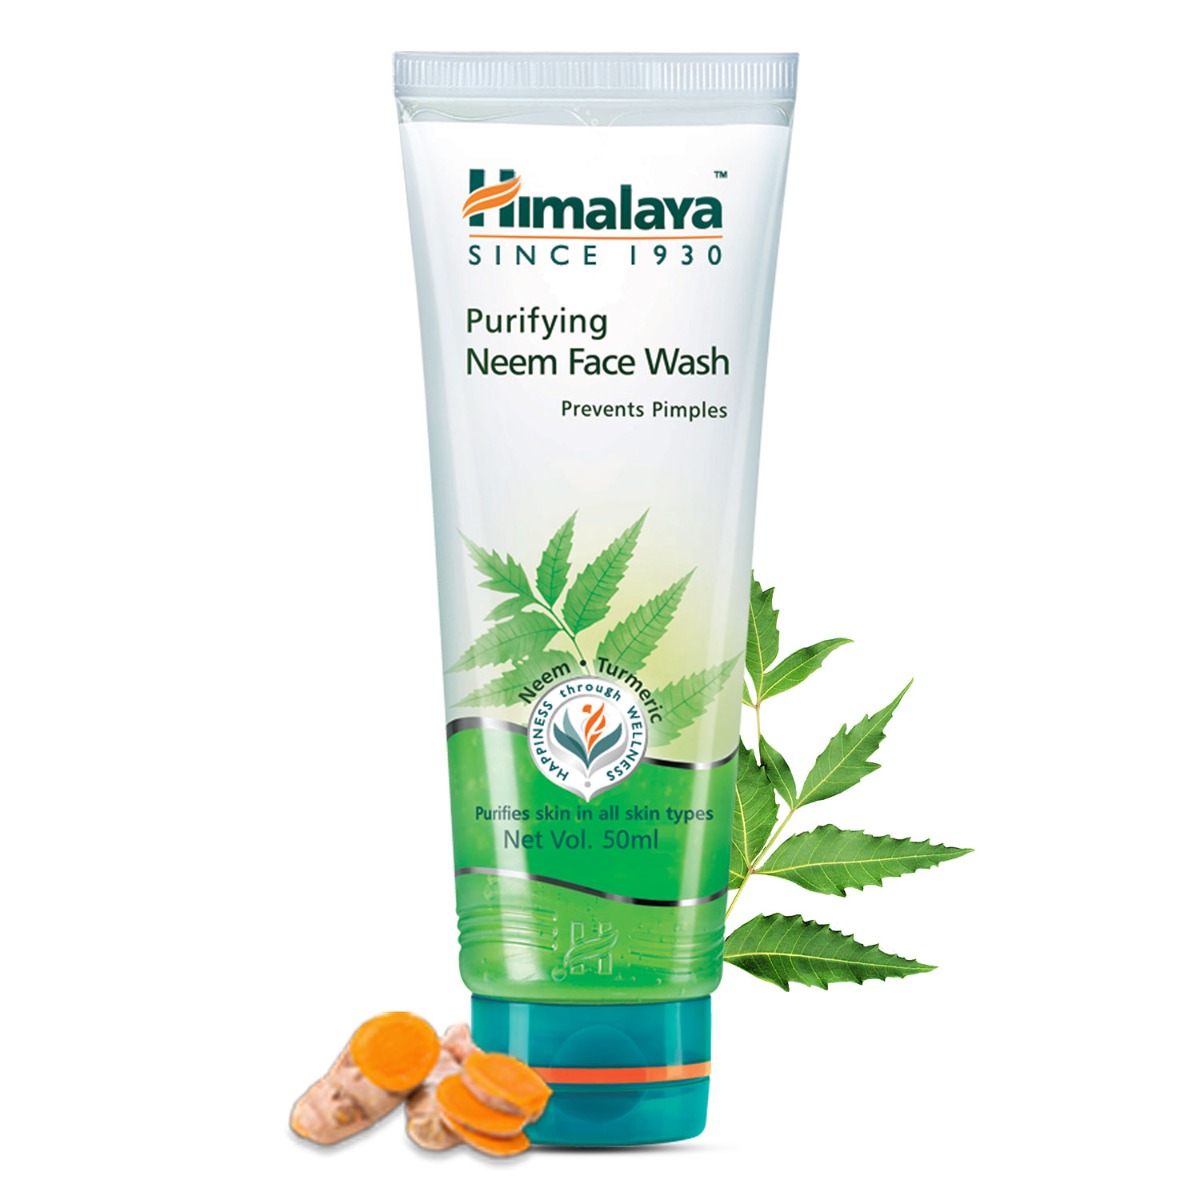 Himalaya Purifying Neem Face Wash, 50ml